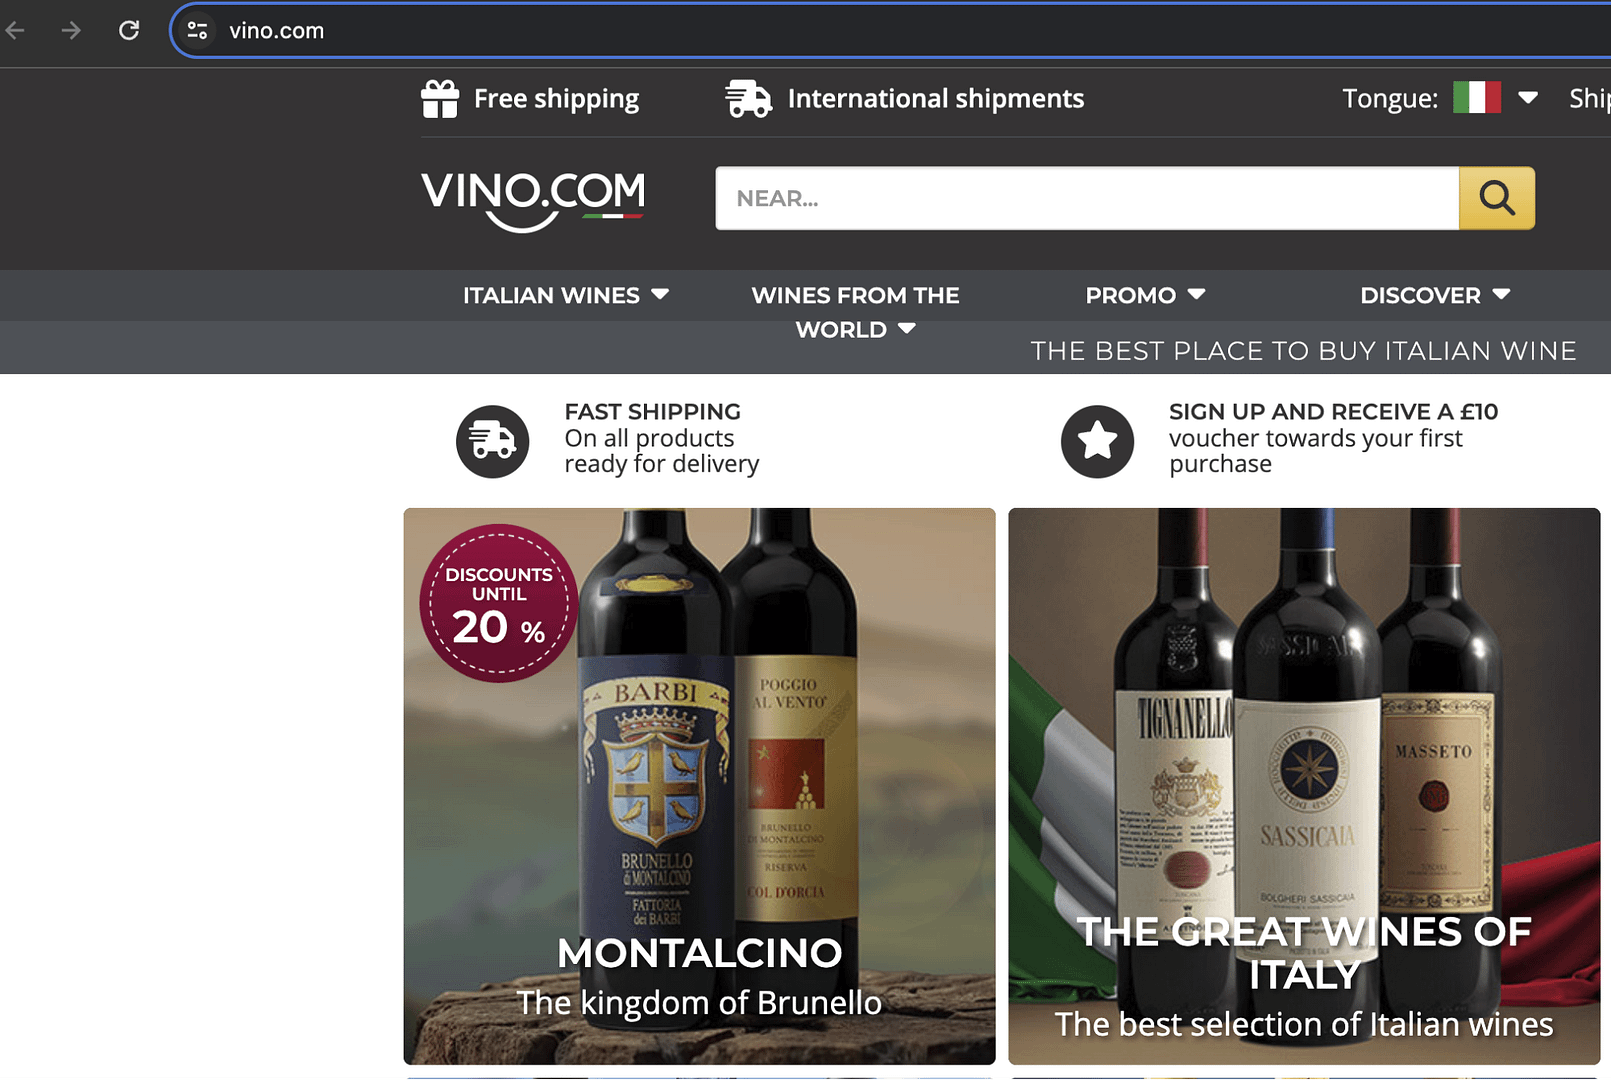 Multilingual business domain idea example from Vino.com.